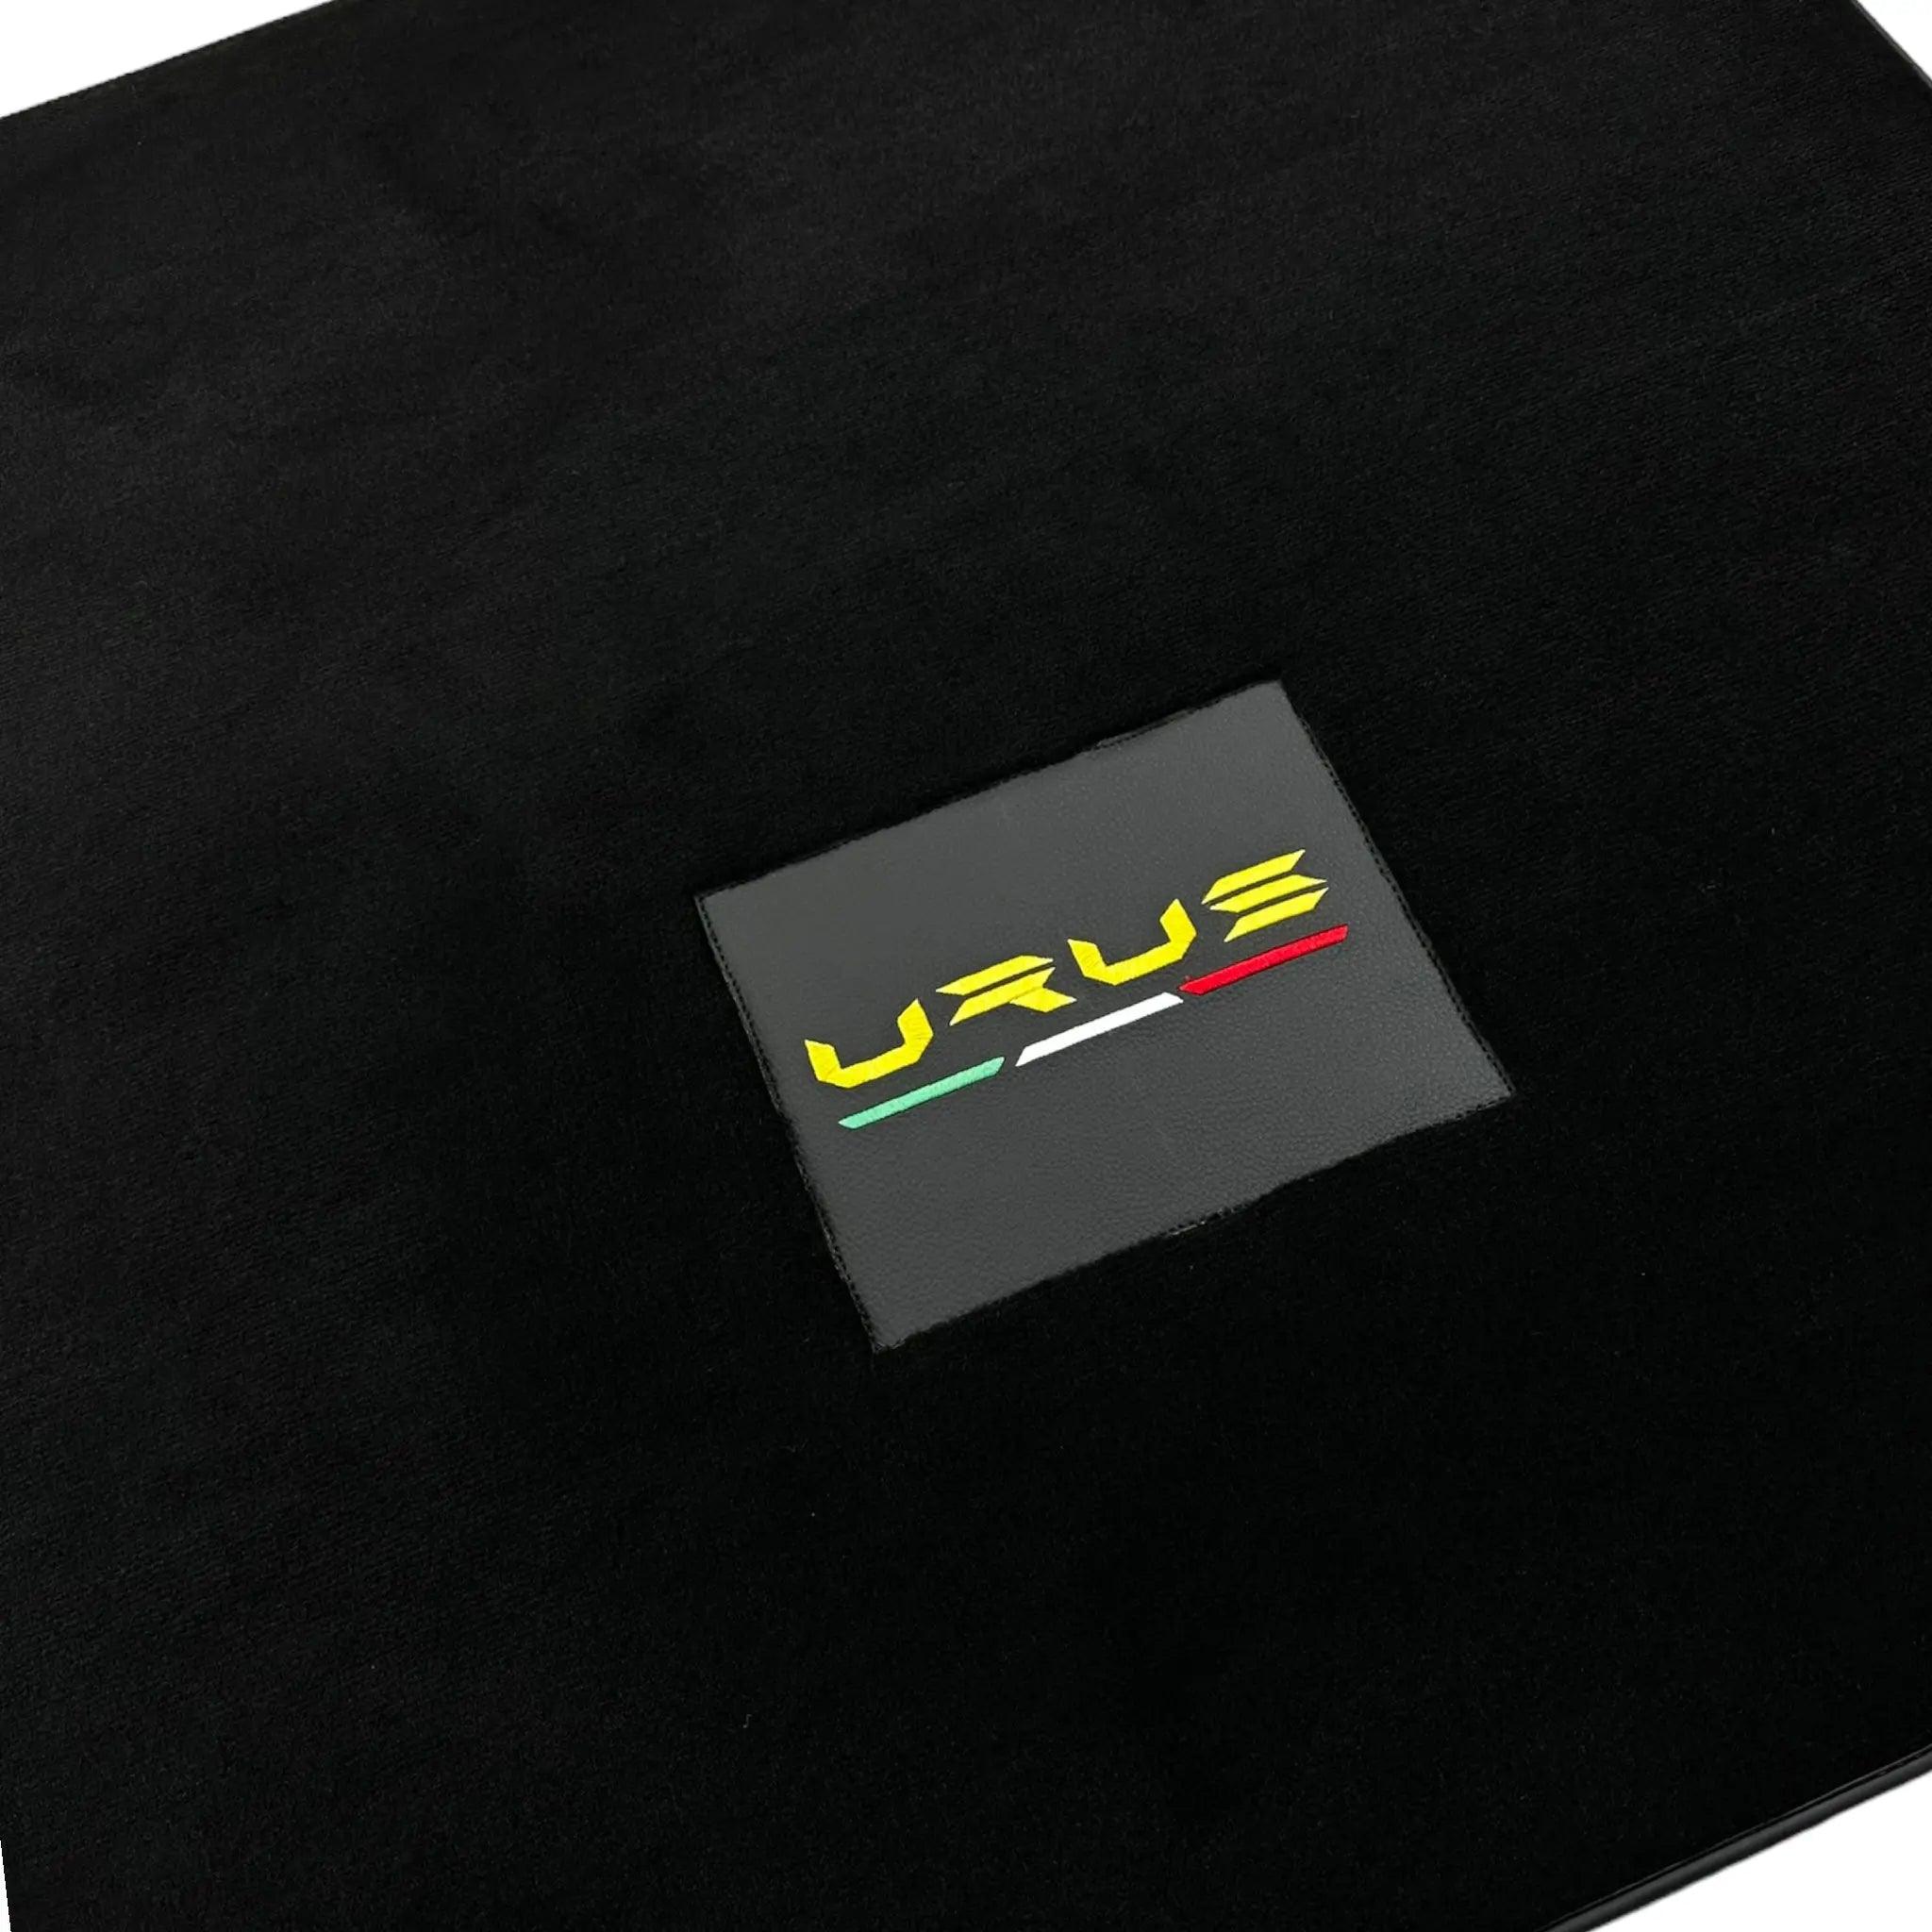 Trunk Mat For Lamborghini Urus With Black Leather